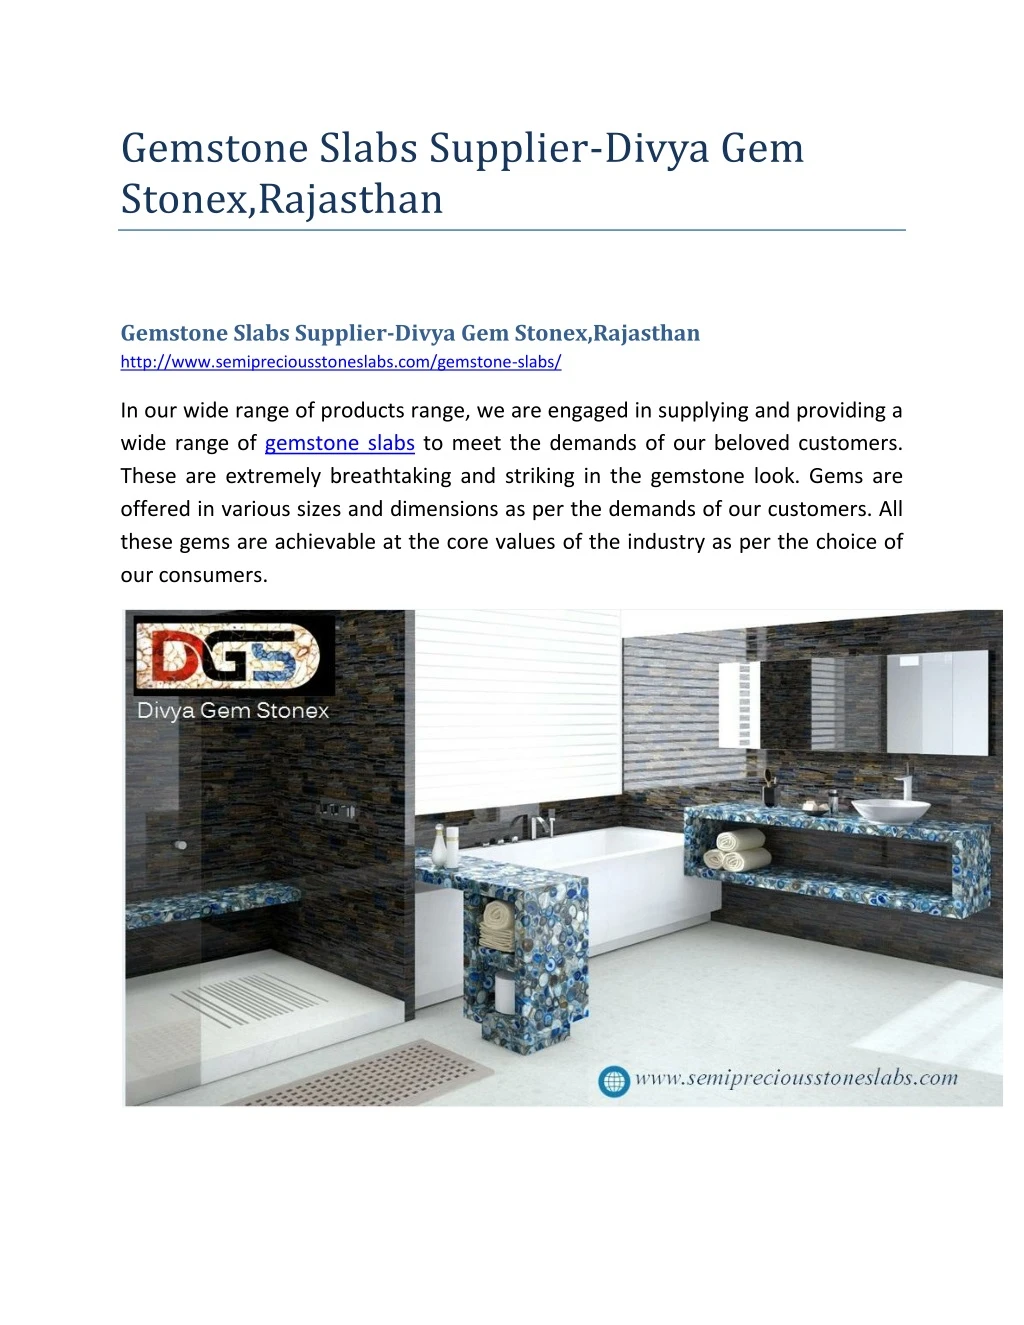 gemstone slabs supplier divya gem stonex rajasthan